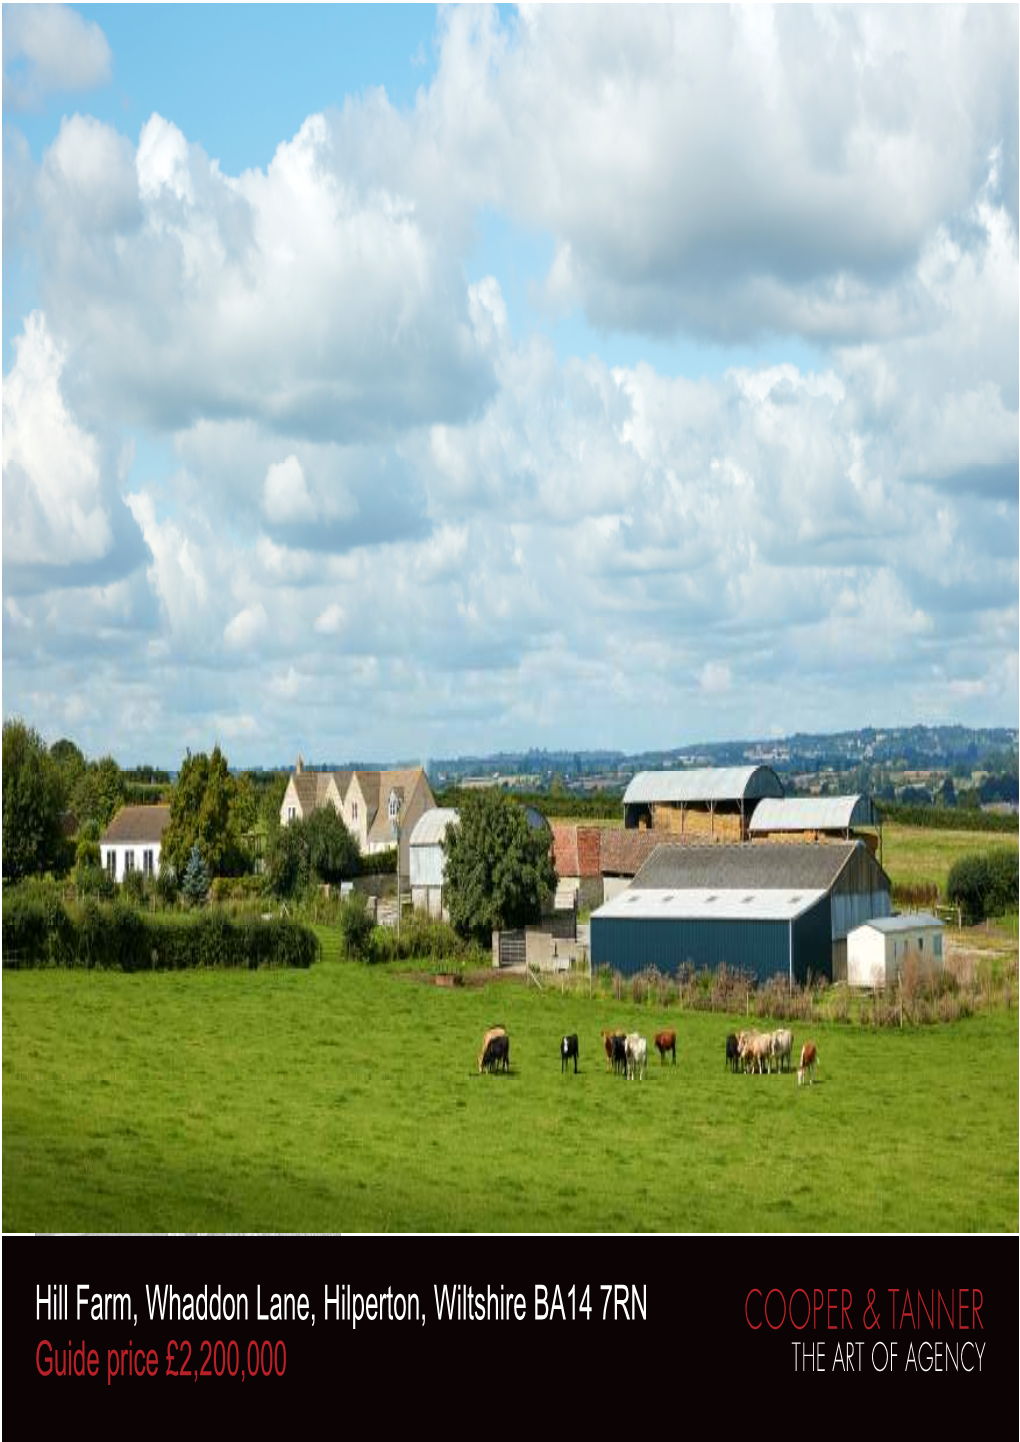 Hill Farm, Whaddon Lane, Hilperton, Wiltshire BA14 7RN Guide Price £2,200,000